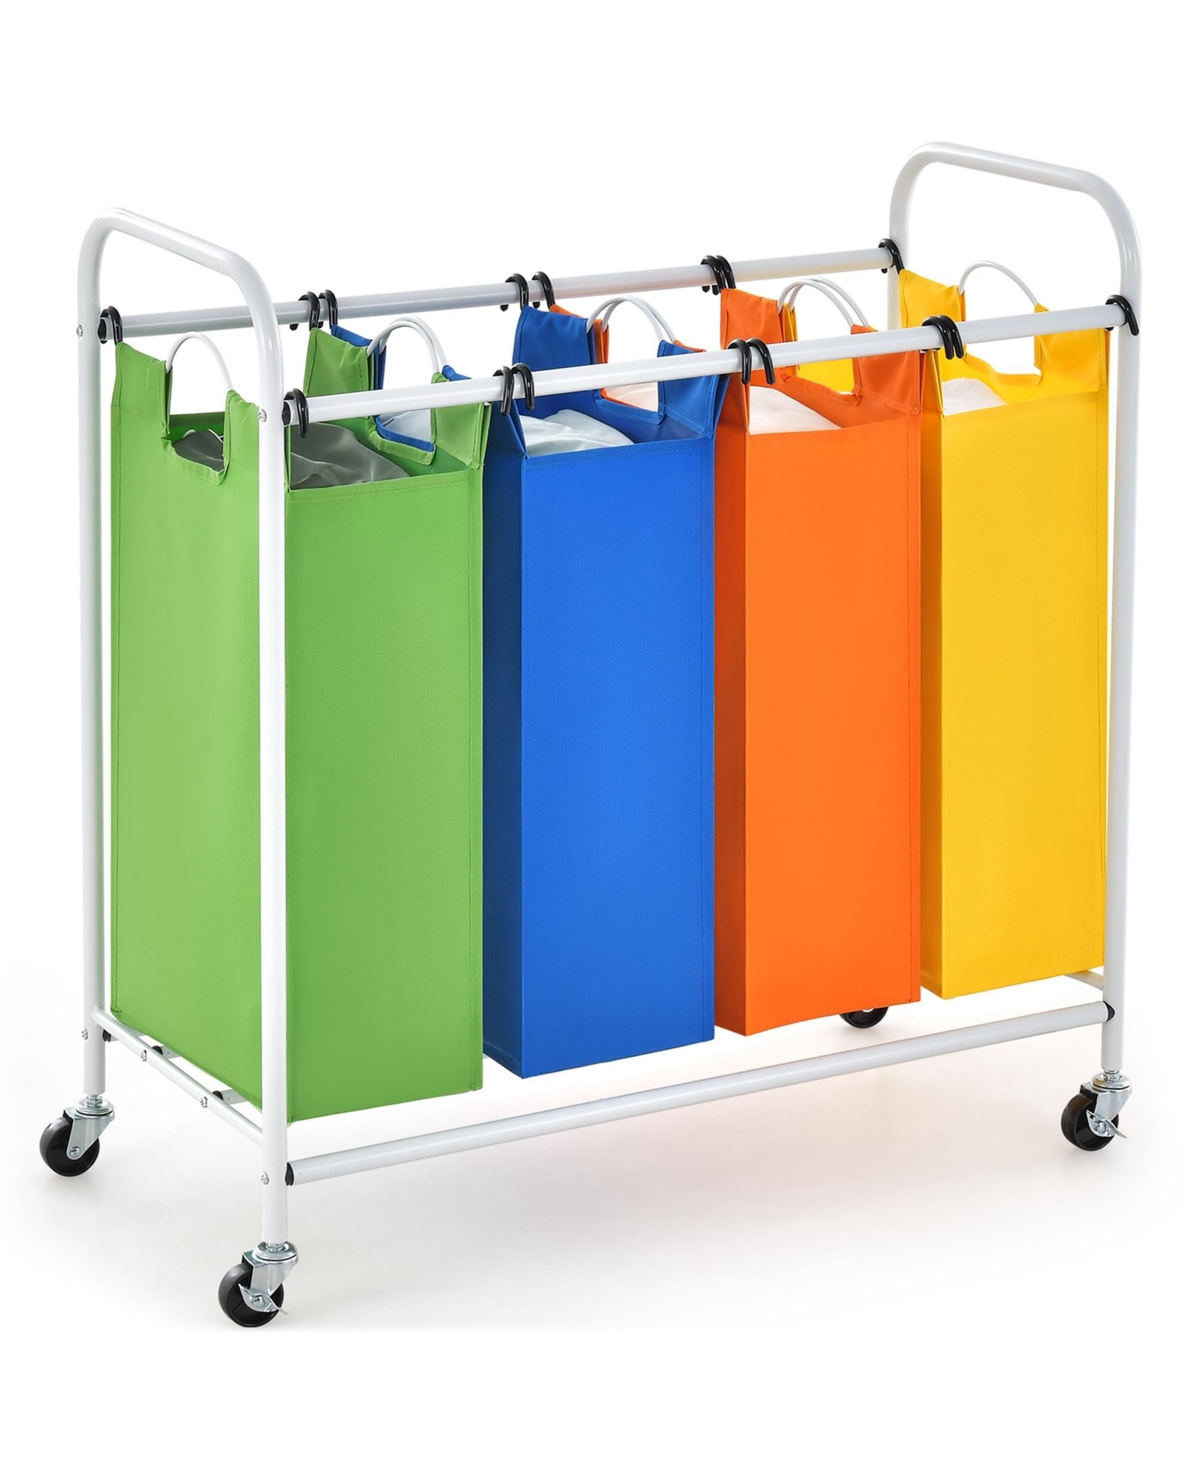 4 Bag Laundry Sorter Cart Clothes Hamper Storage Organizer Removable Bags Wheel - White